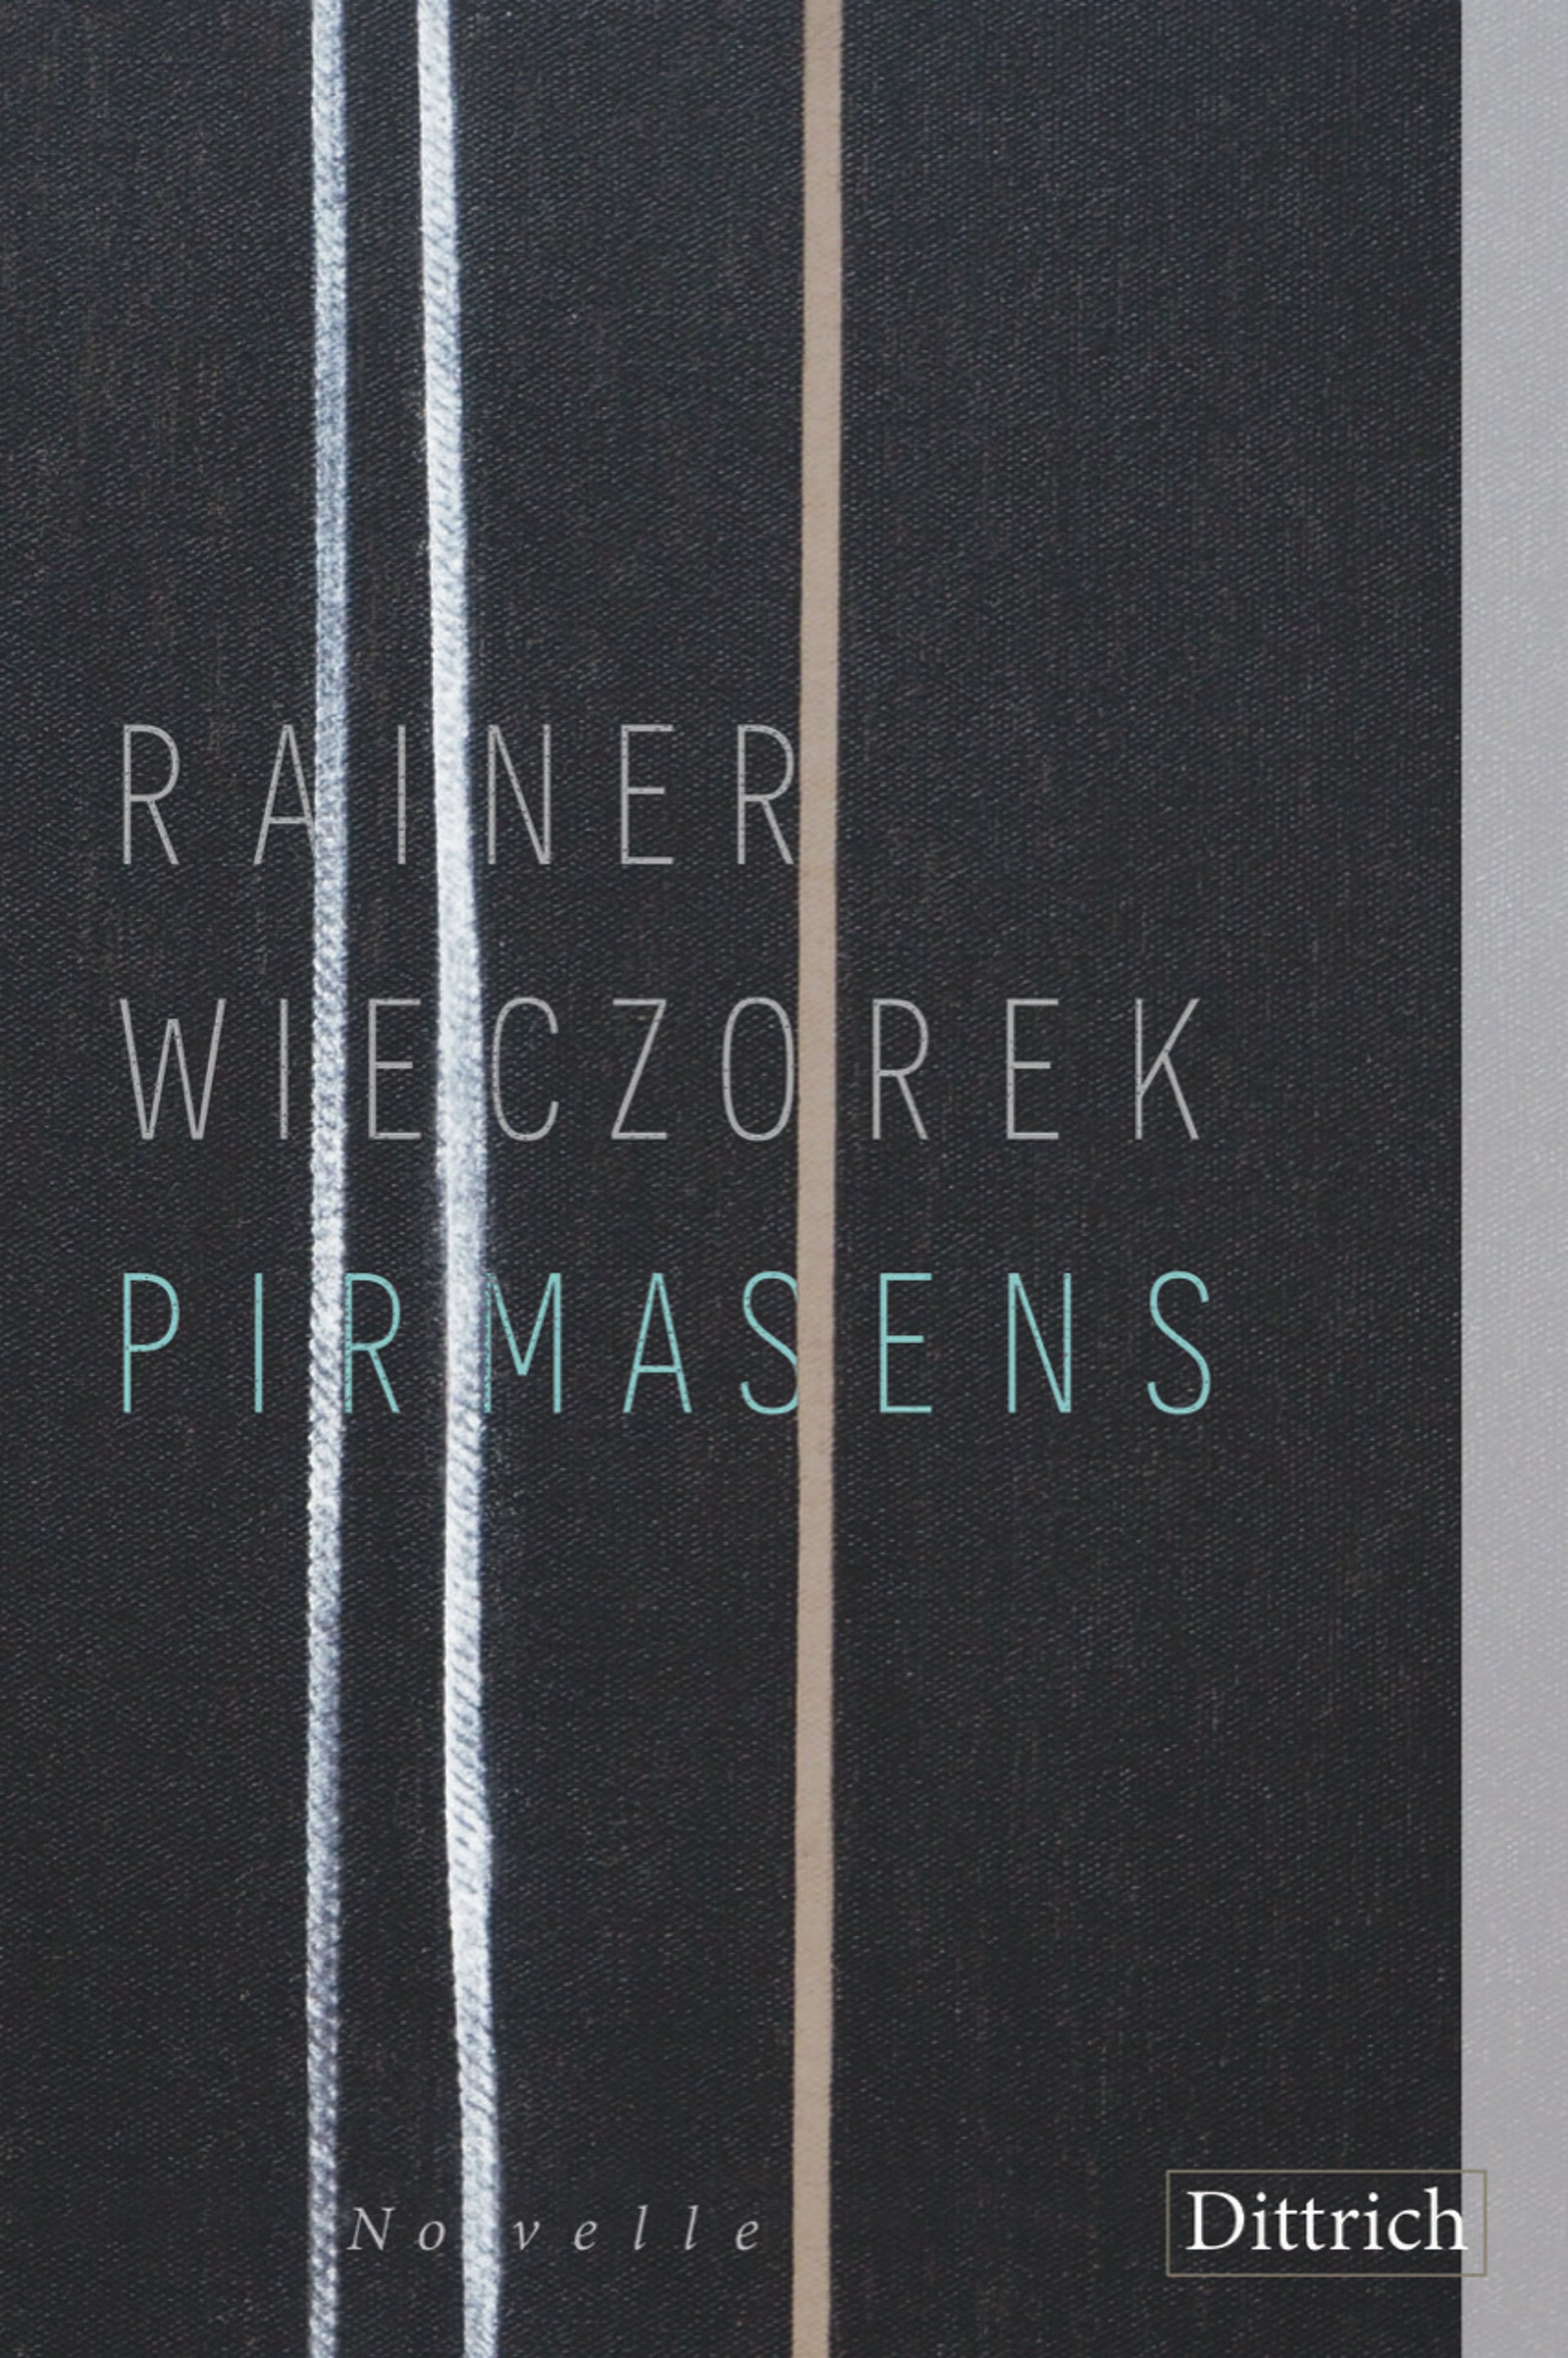 book cover: rainer wieczorek, pirmasens, 2020, 124 pages, 21,5 x 14 cm, dittrich verlag